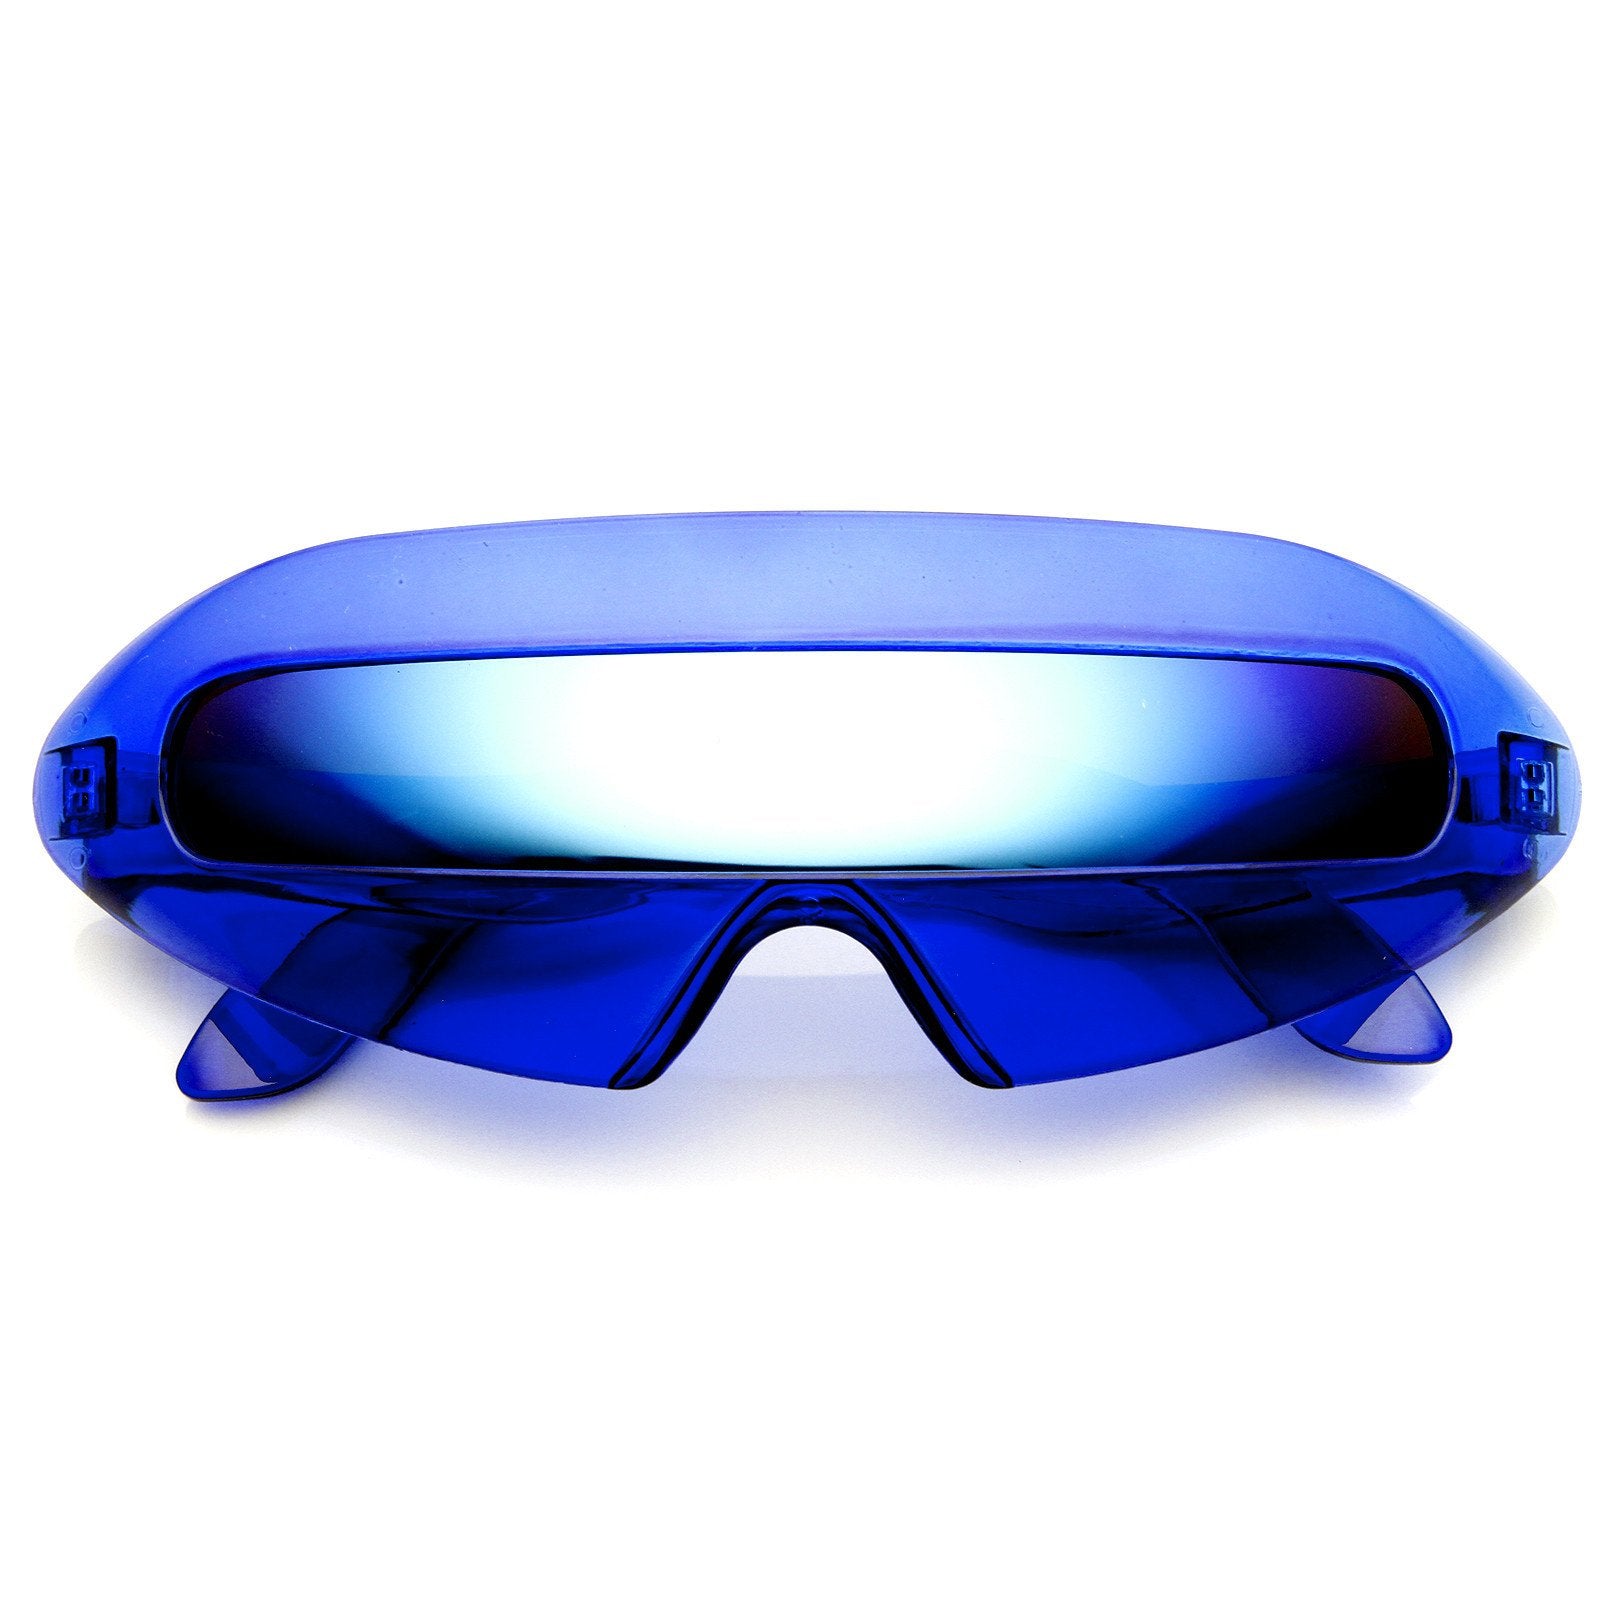 Retro Futuristic Cyclops Mirrored Lens Wrap Around Sunglasses 9125 Zerouv 